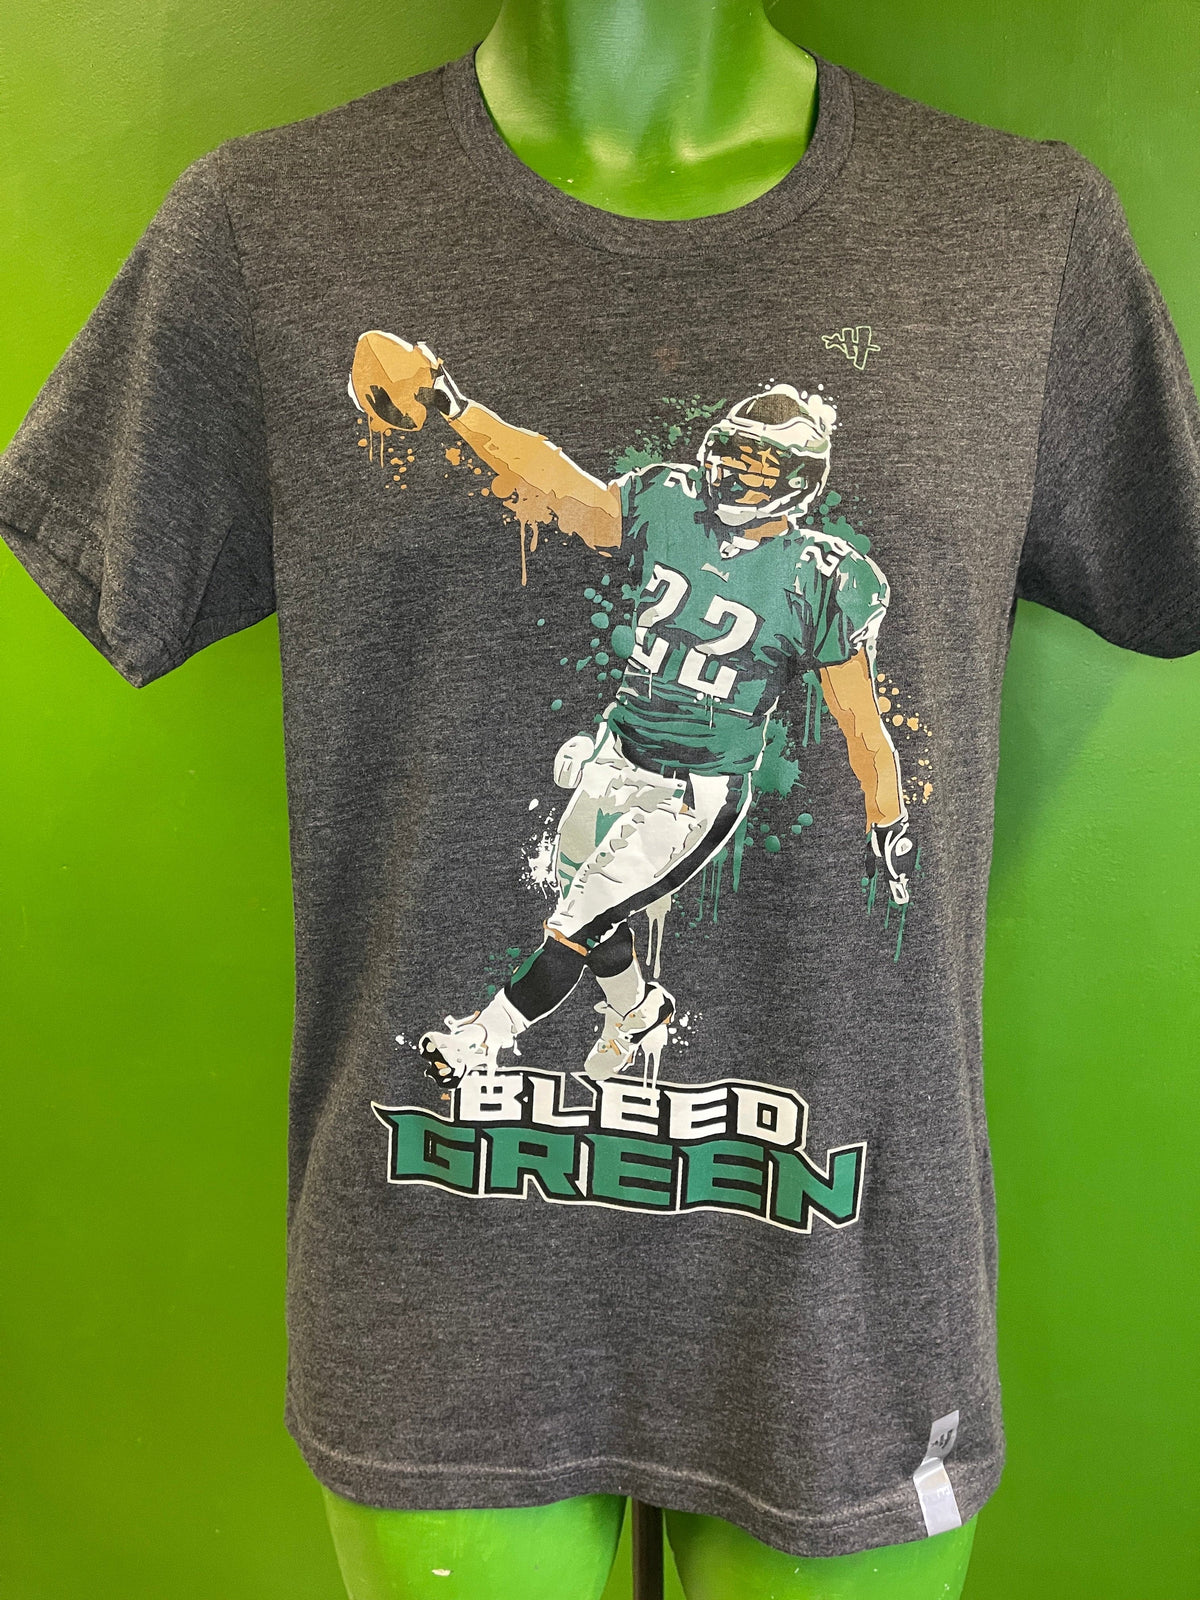 NFL Philadelphia Eagles Bleed Green Heathered Charcoal Grey T-Shirt Men's Small